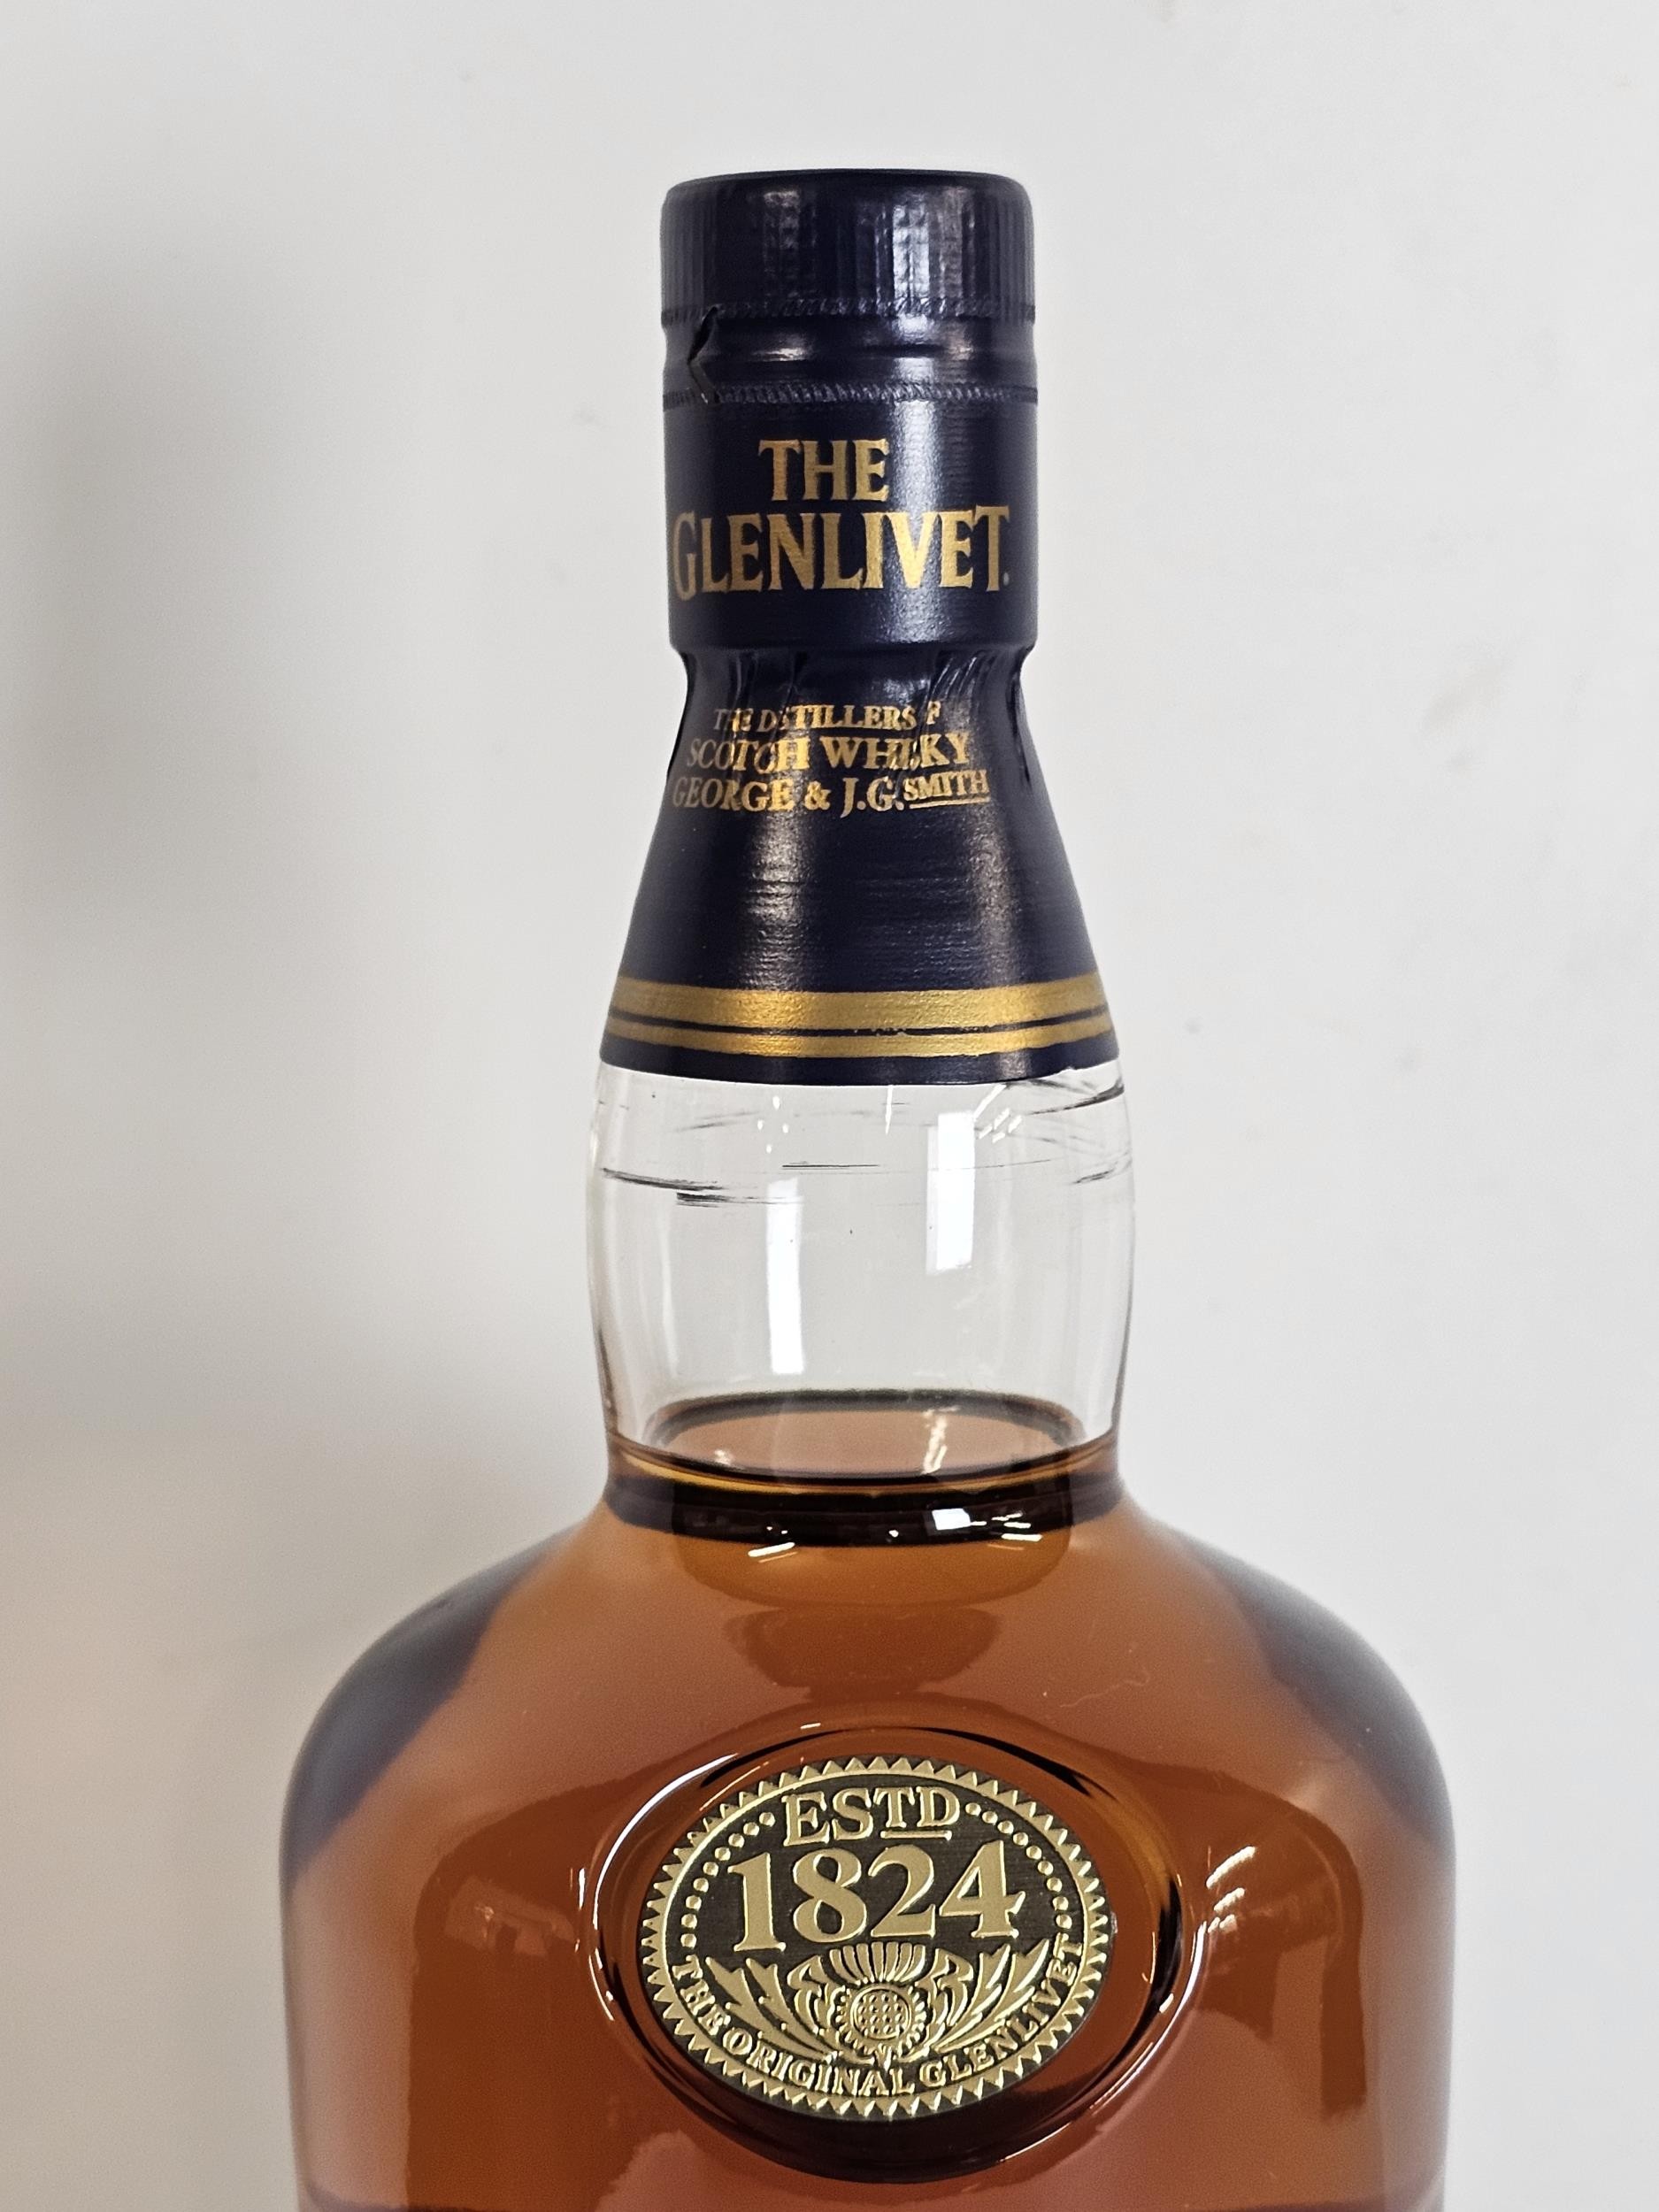 Gordon & MacPhail 'George & J.G.Smith's' Glenlivet 18 Year Old Single Malt Scotch Whisky - Image 2 of 5